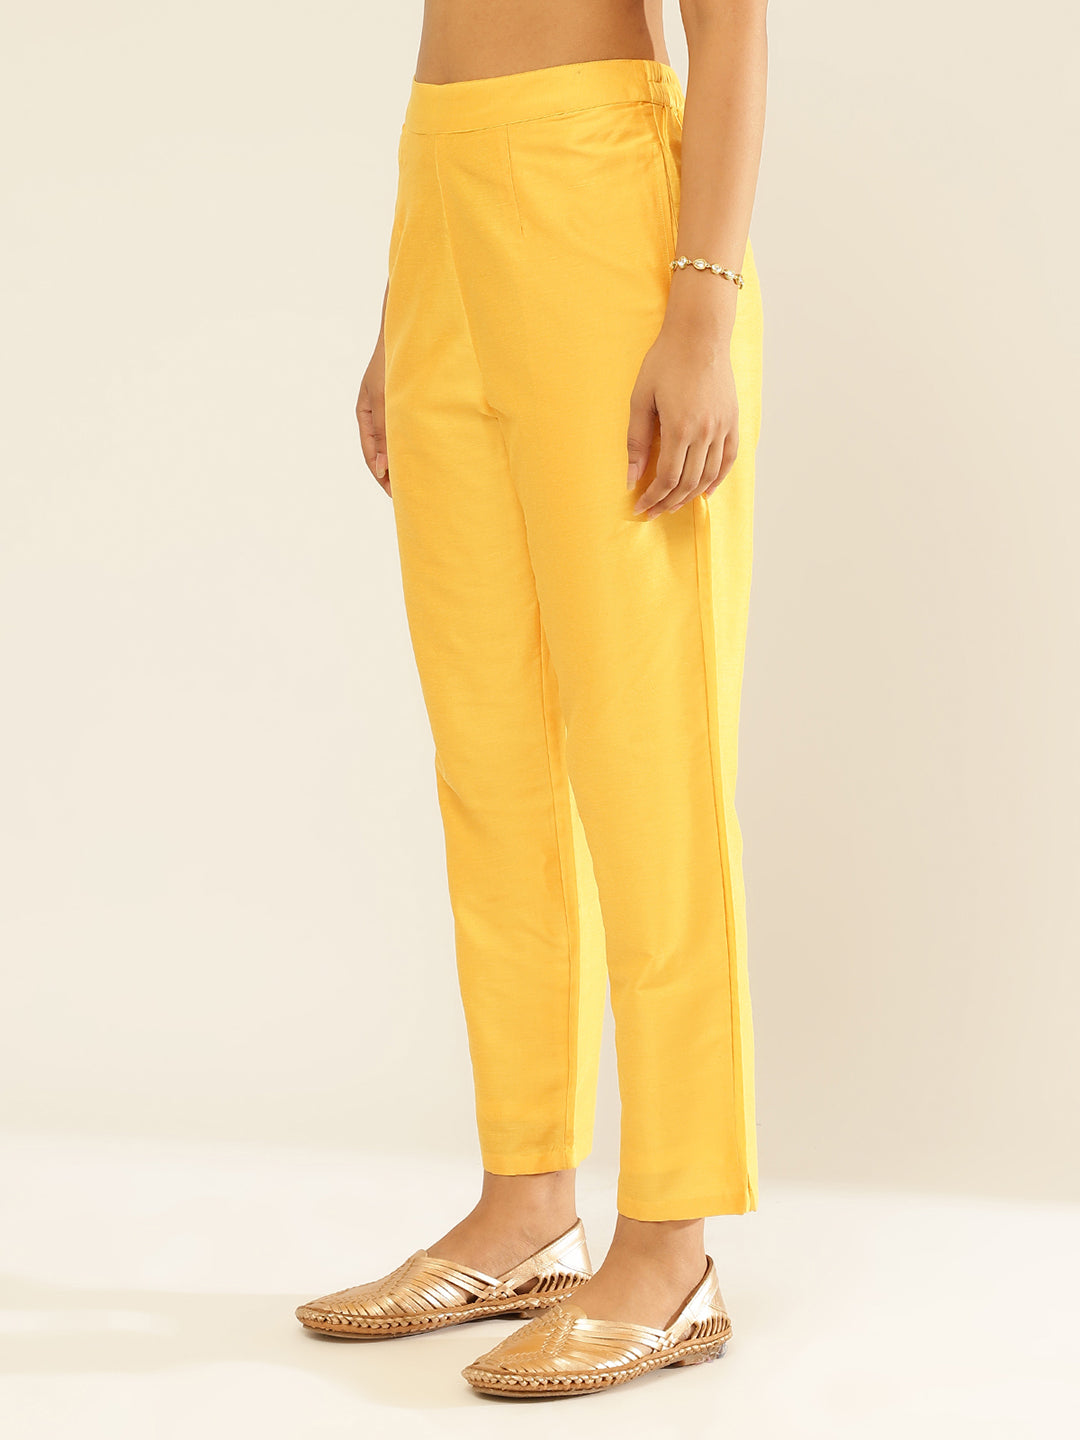 Buy Yellow Trousers  Pants for Women by MAAESA Online  Ajiocom